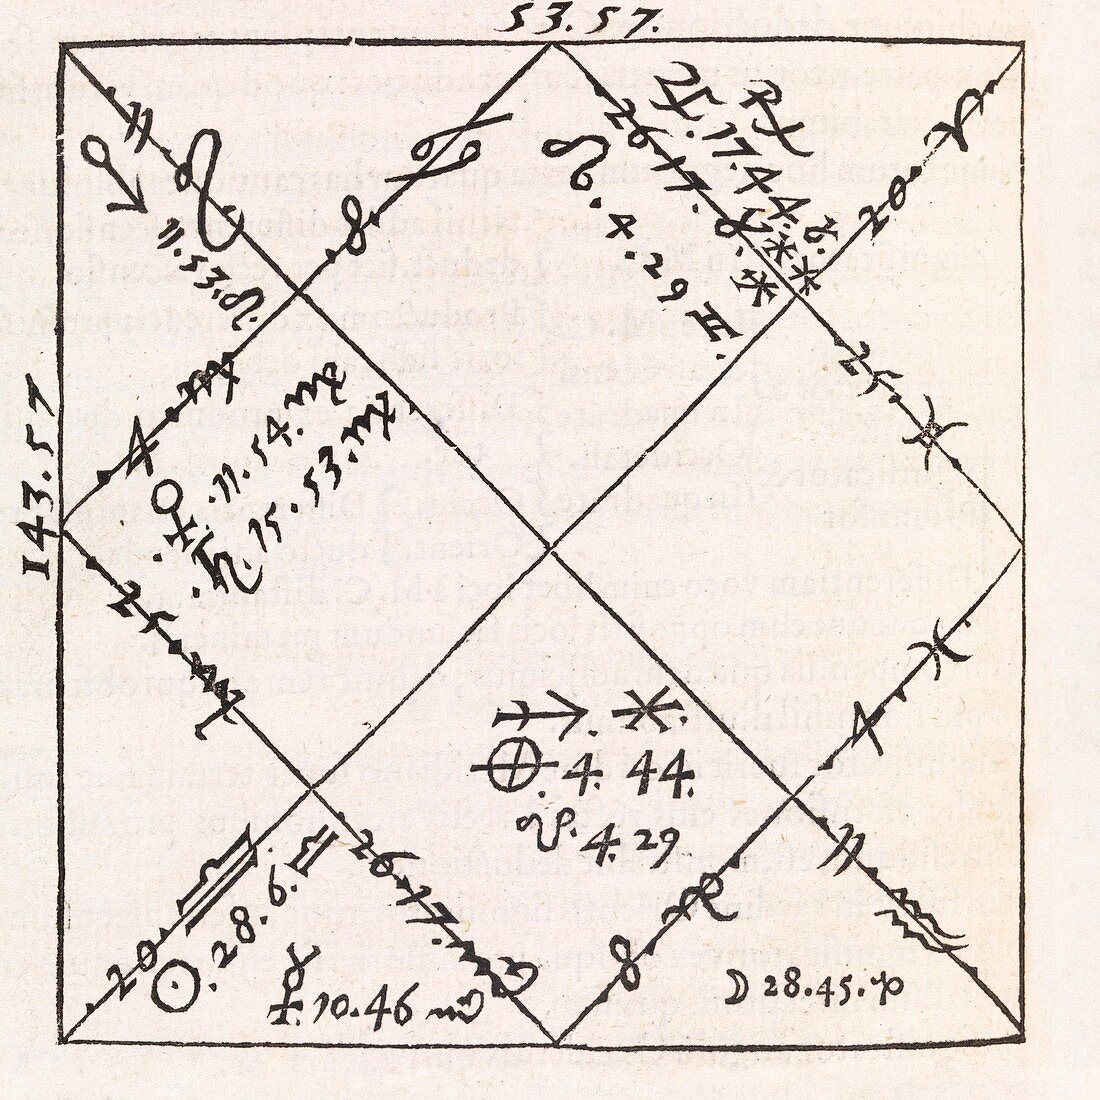 Astrology chart,16th century